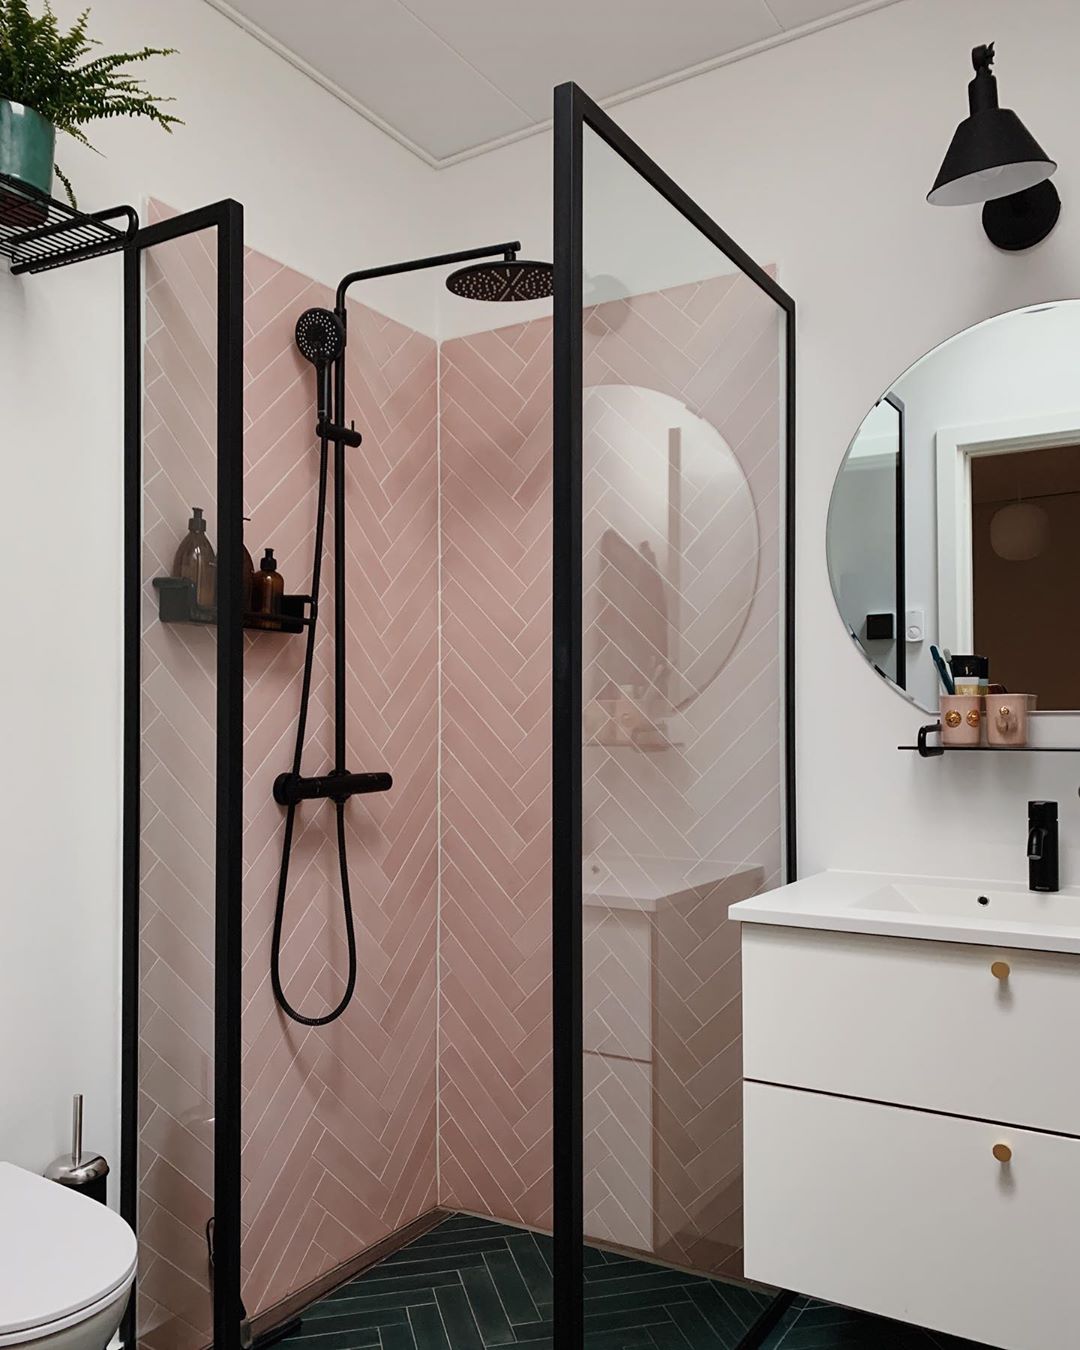 Modern bathroom with pink tile in shower. Photo by Instagram user @ditteblog